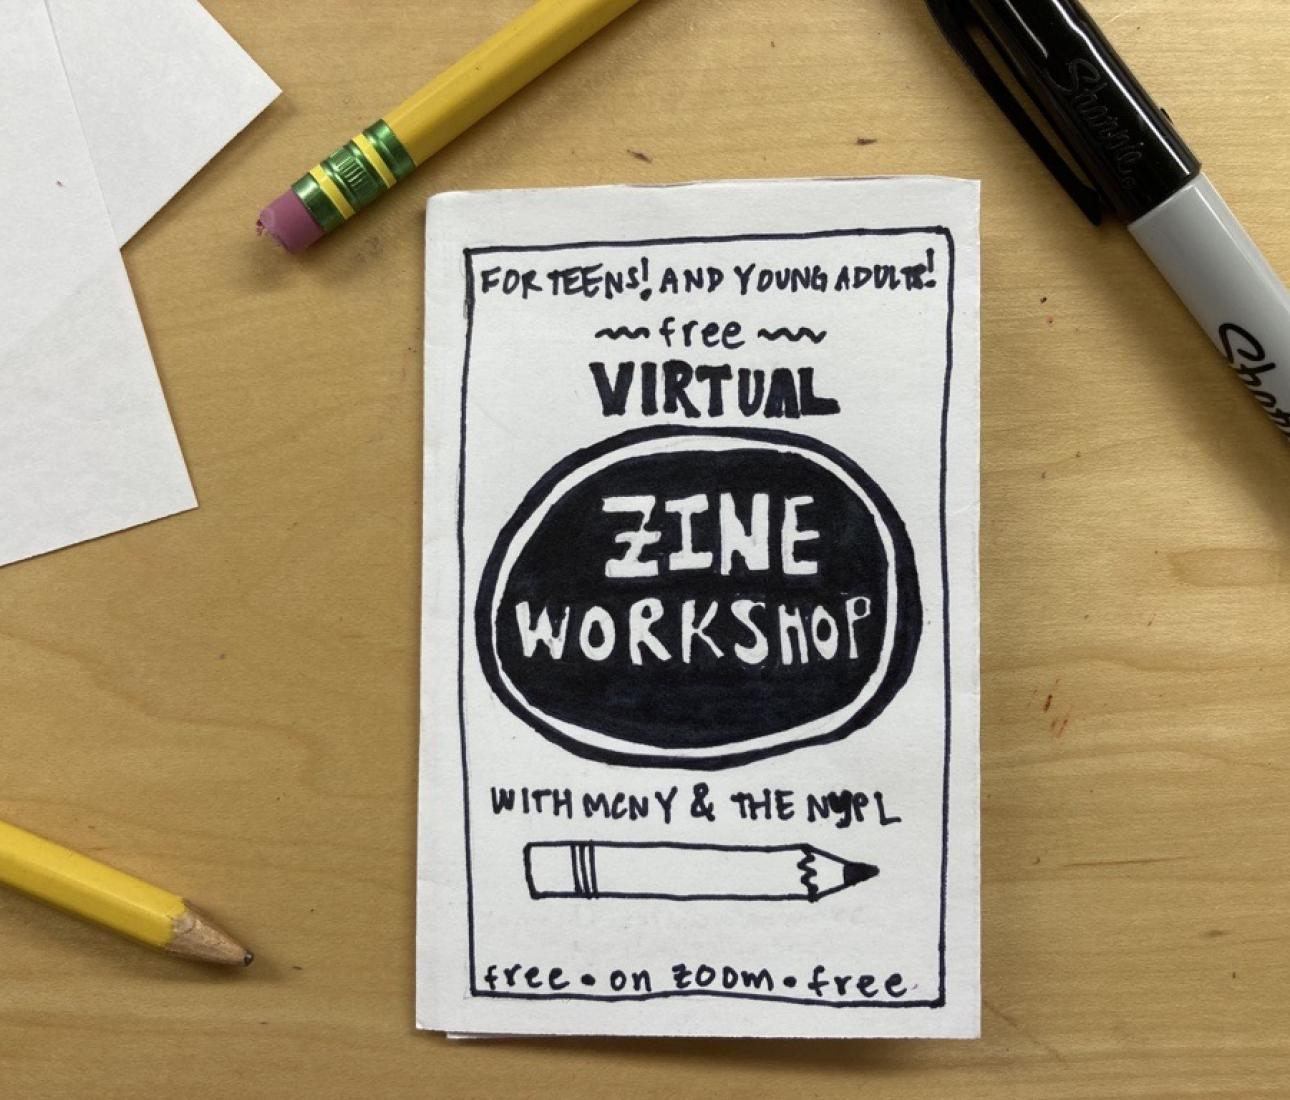 Workshop de Zine Virtual